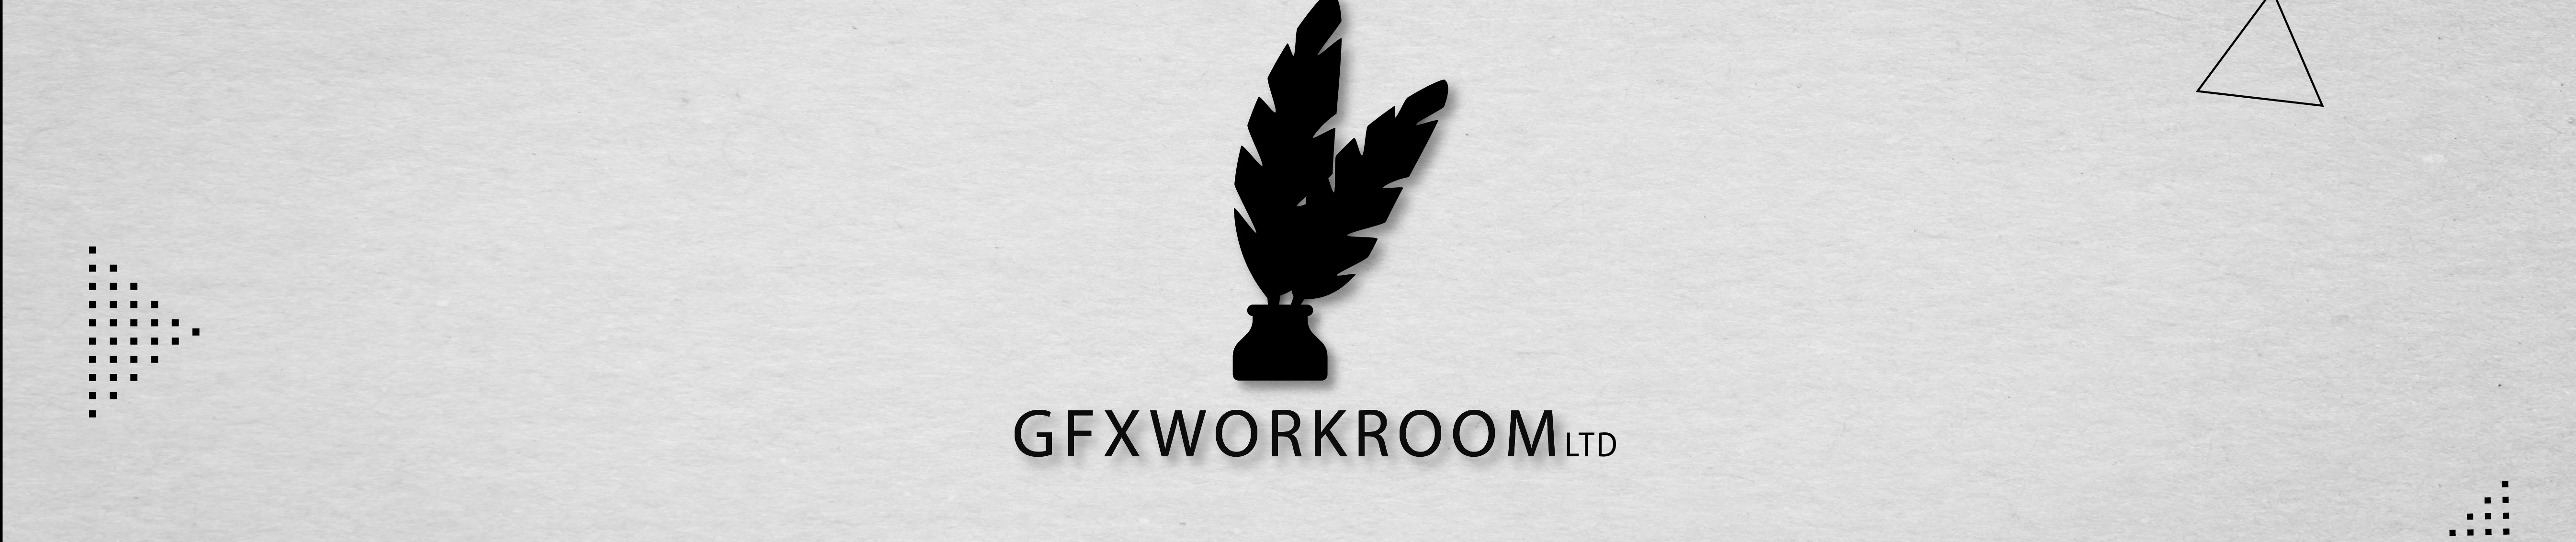 GFX workrooms profilbanner